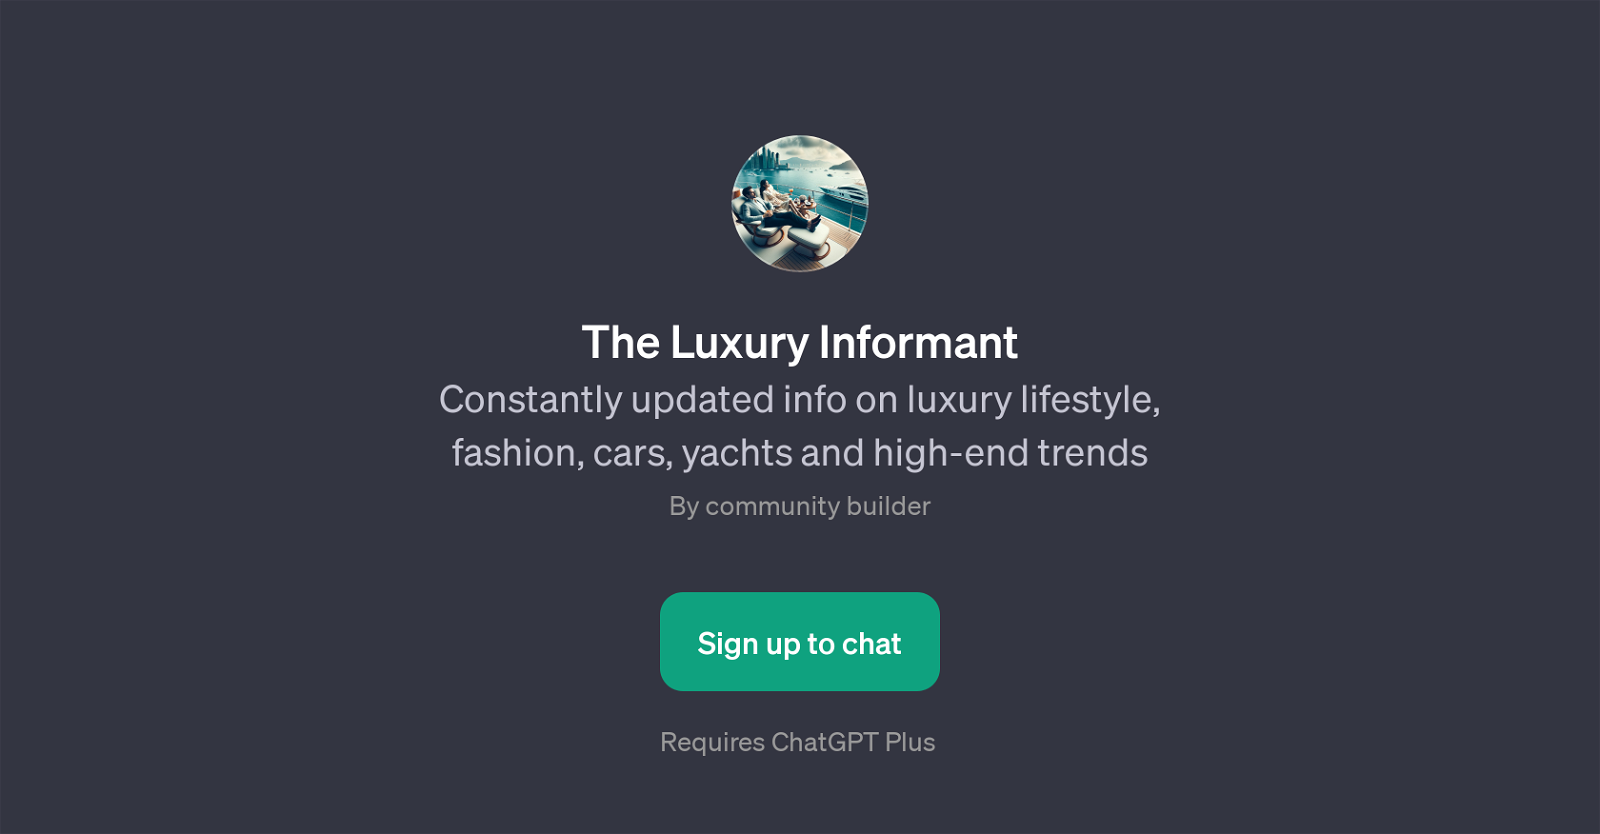 The Luxury Informant website